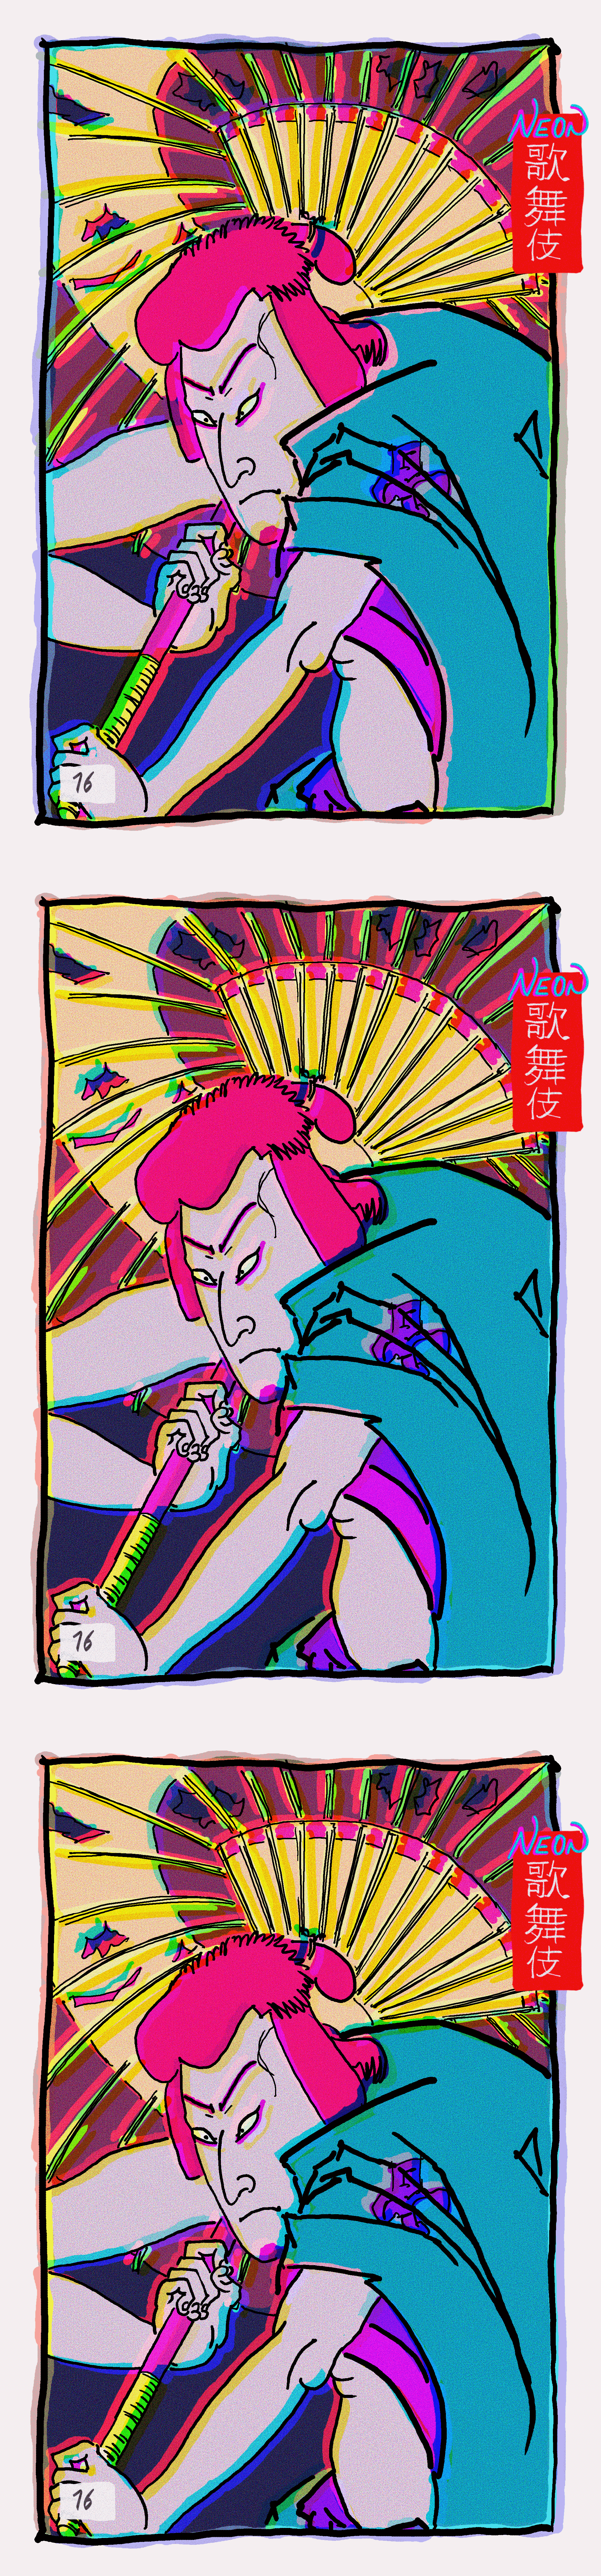 Neon Kabuki #16